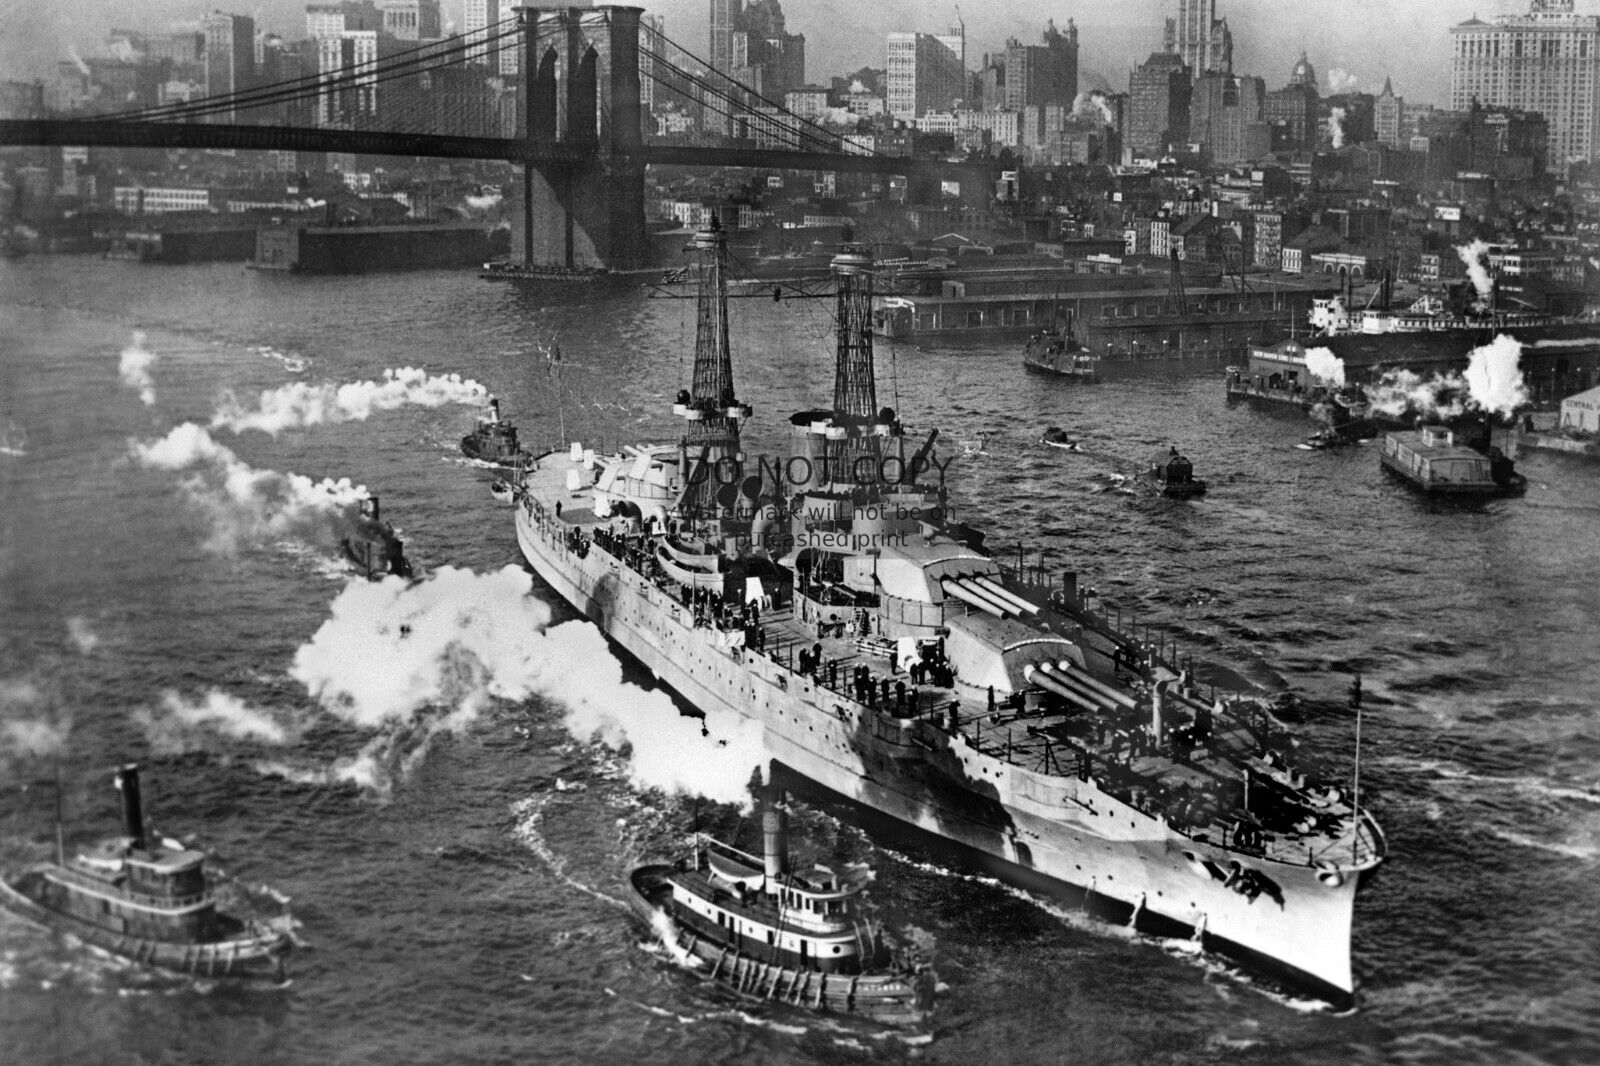 USS ARIZONA NAVY WW2 BATTLESHIP PASSING THROUGH NEW YORK CITY 4X6 PHOTO POSTCARD